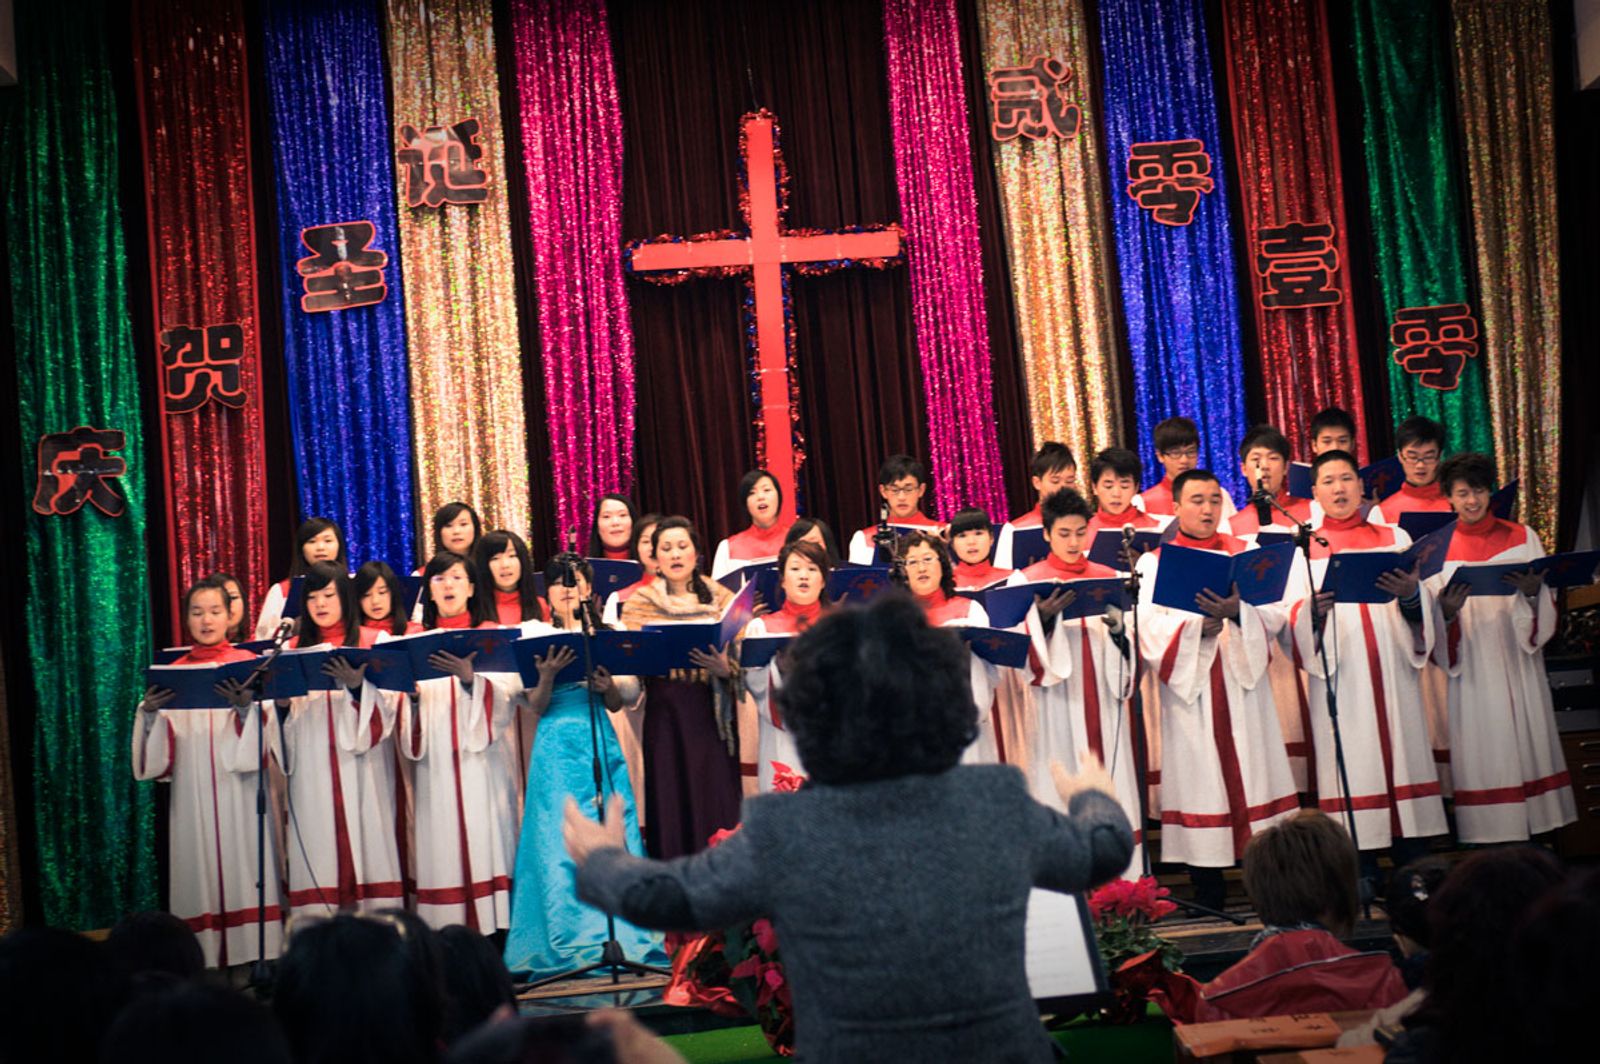 © Agnese Morganti - Prato, the Gospel Choir of the Chinese Evangelical Church